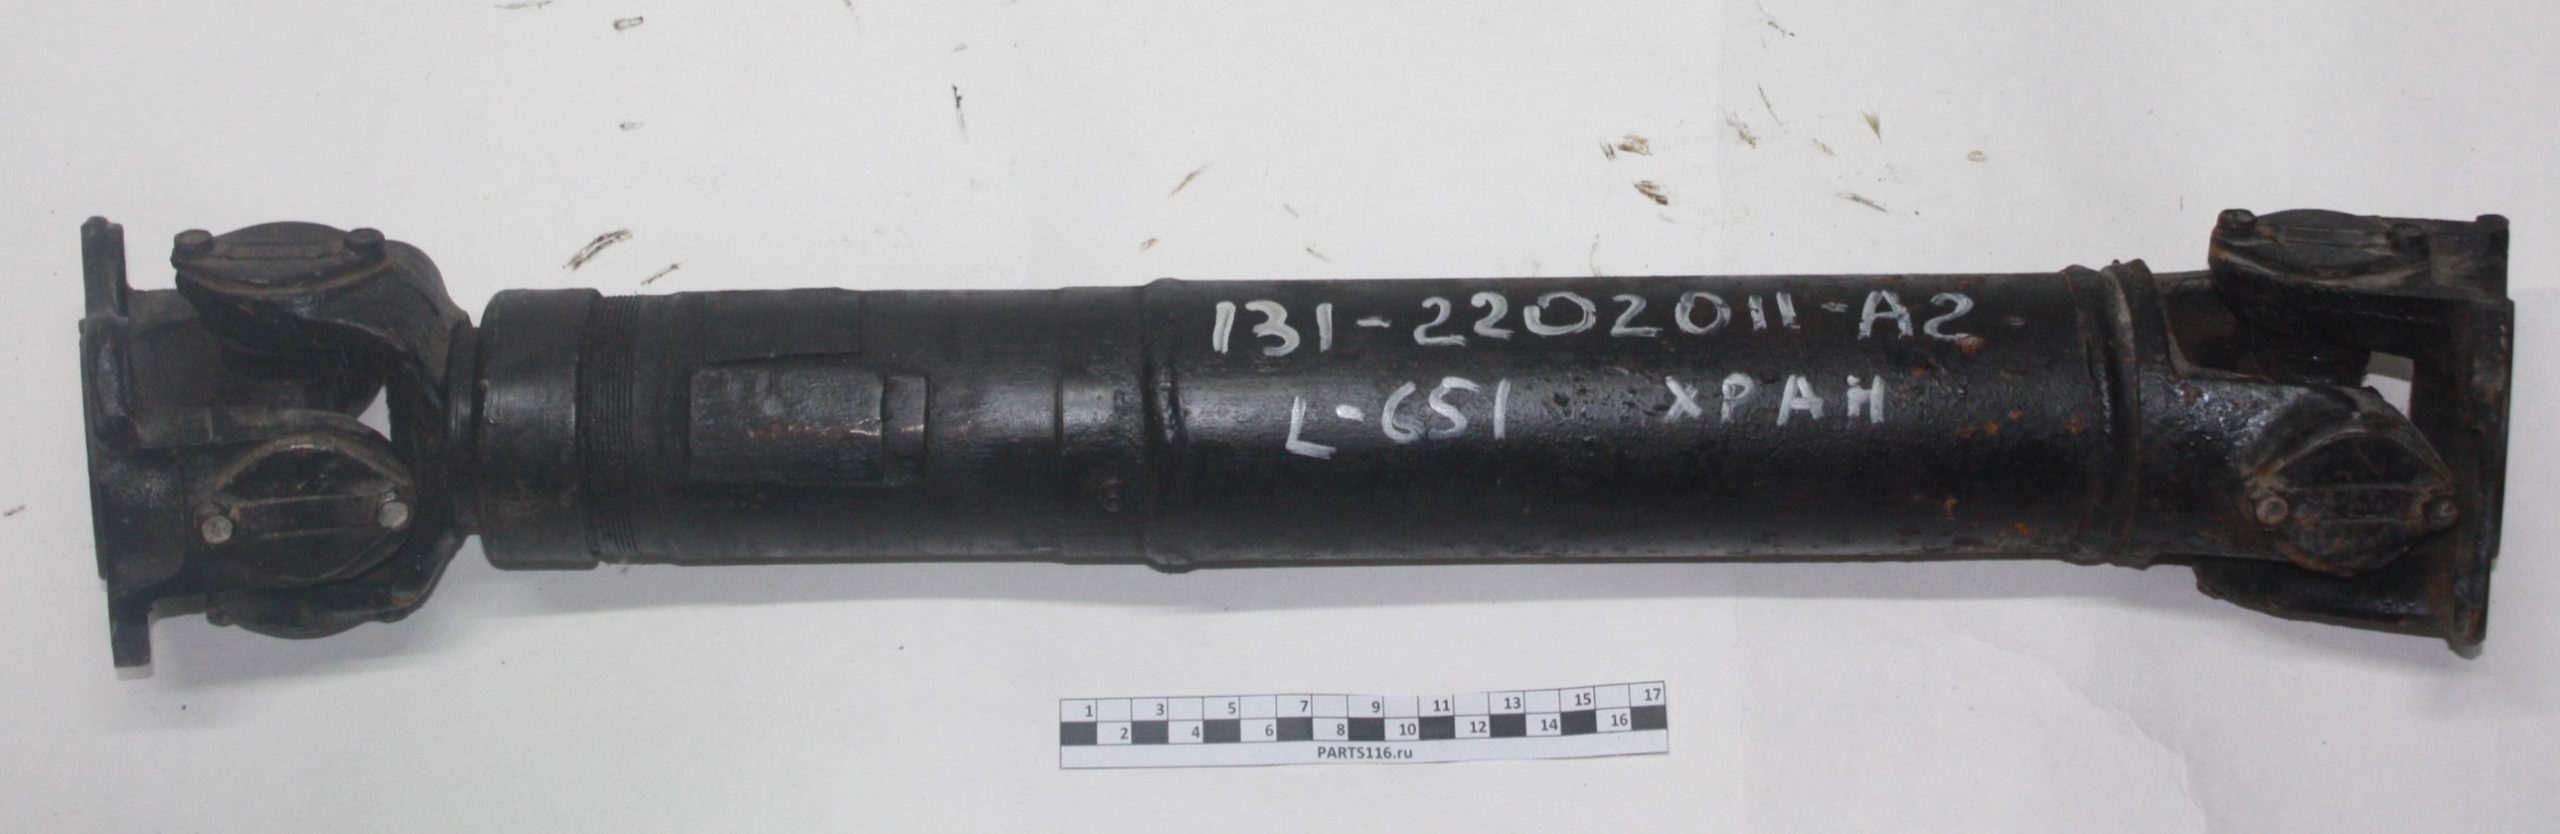 Вал карданный основной квардатный фланец 4 отв. L=651 мм Зил-131 БЕЛКАРД с хранения (131-2202011-А2)